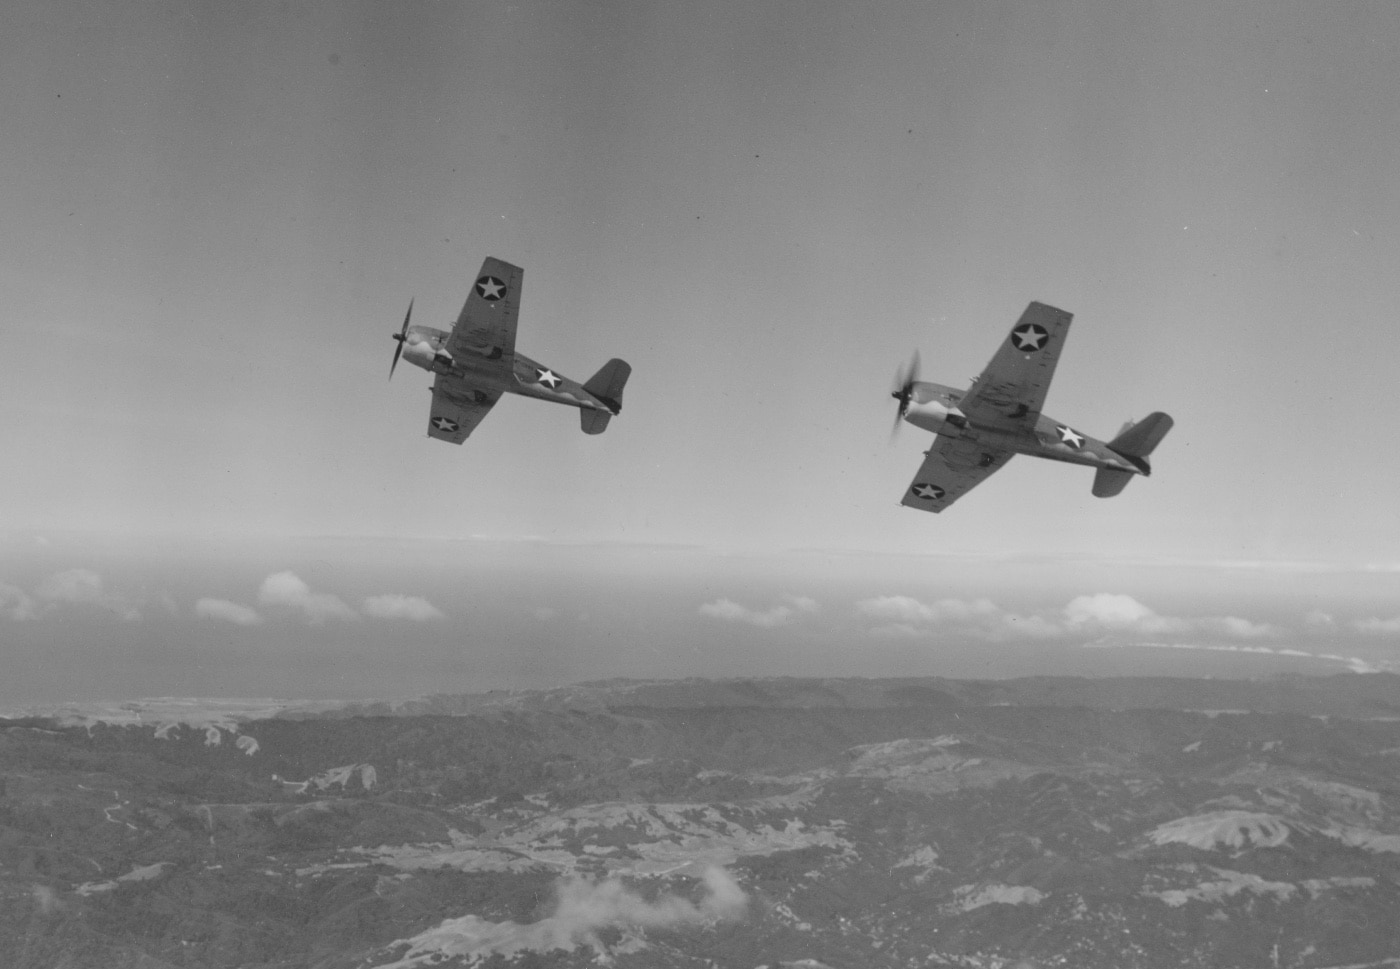 grumman hellcat fighters in flight training over california in 1943